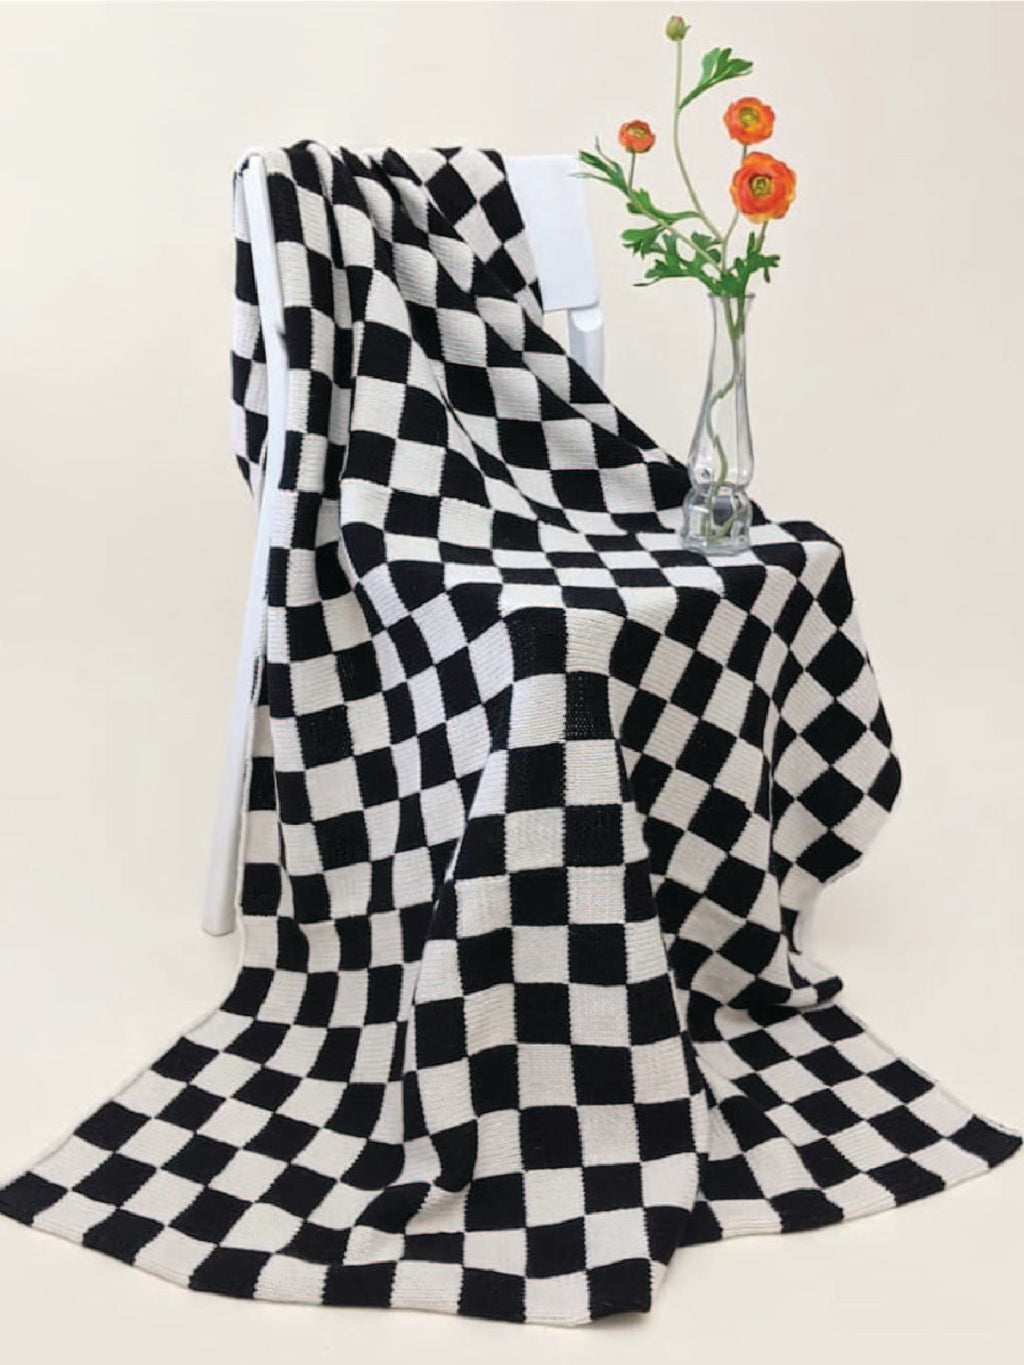 Checkered Throw by Nina Cherie